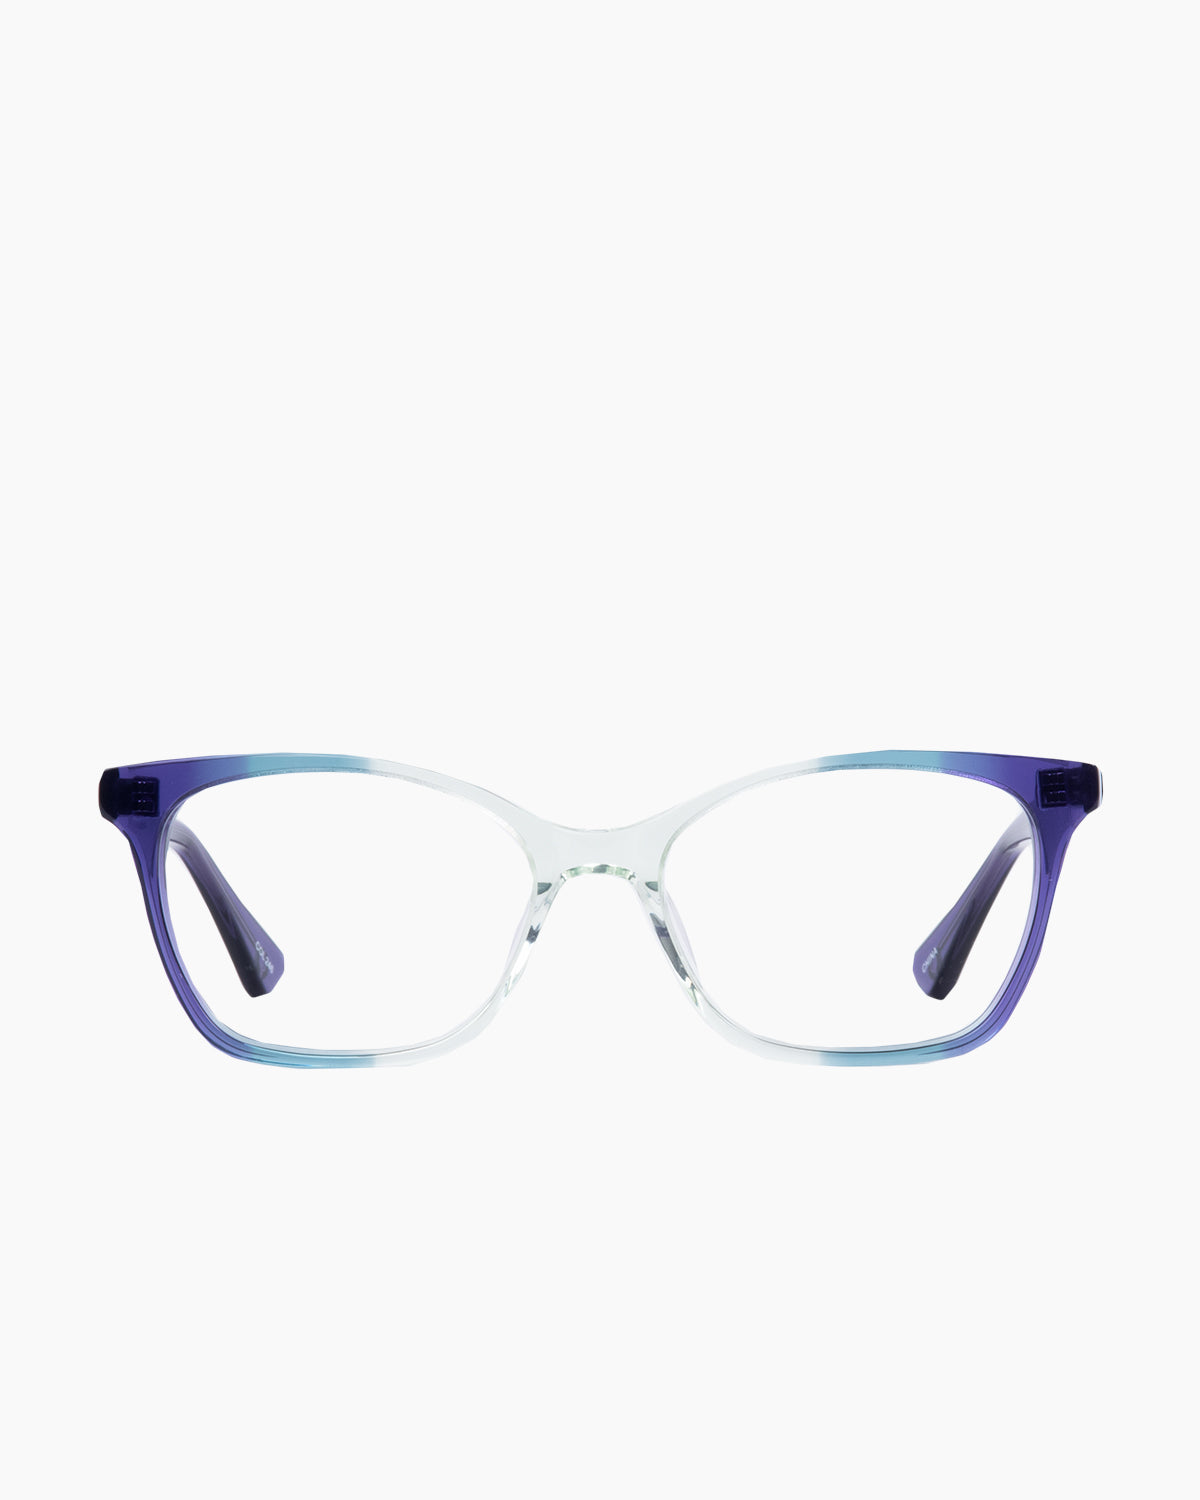 Evolve - Sophia - 246 | Bar à lunettes:  Marie-Sophie Dion